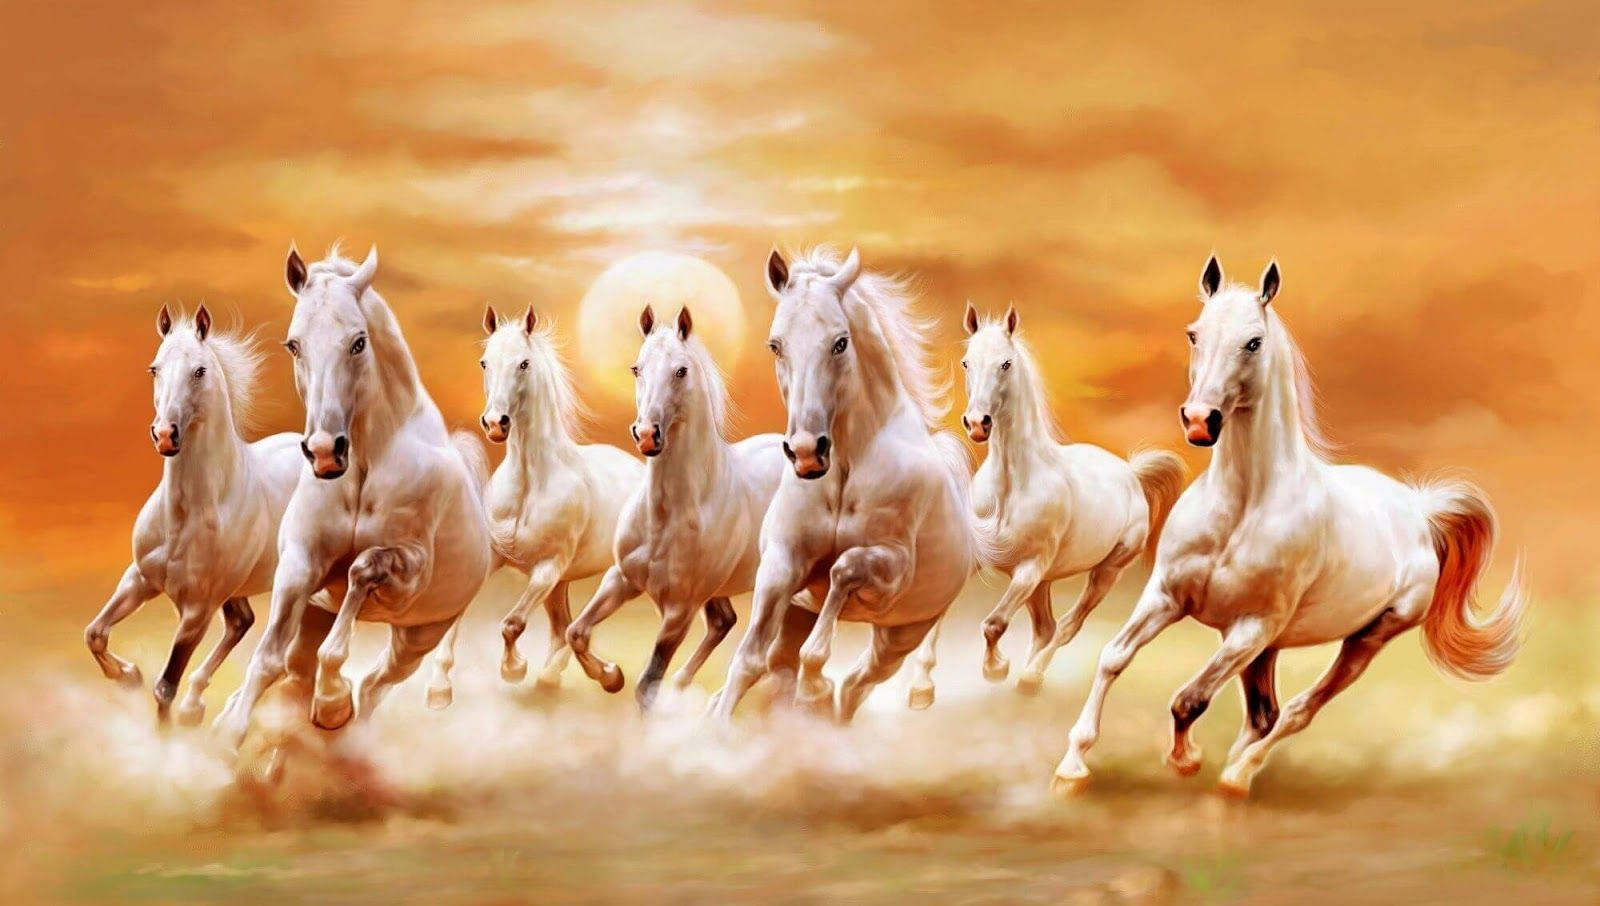 Galloping White Horses During Sunset Wallpaper